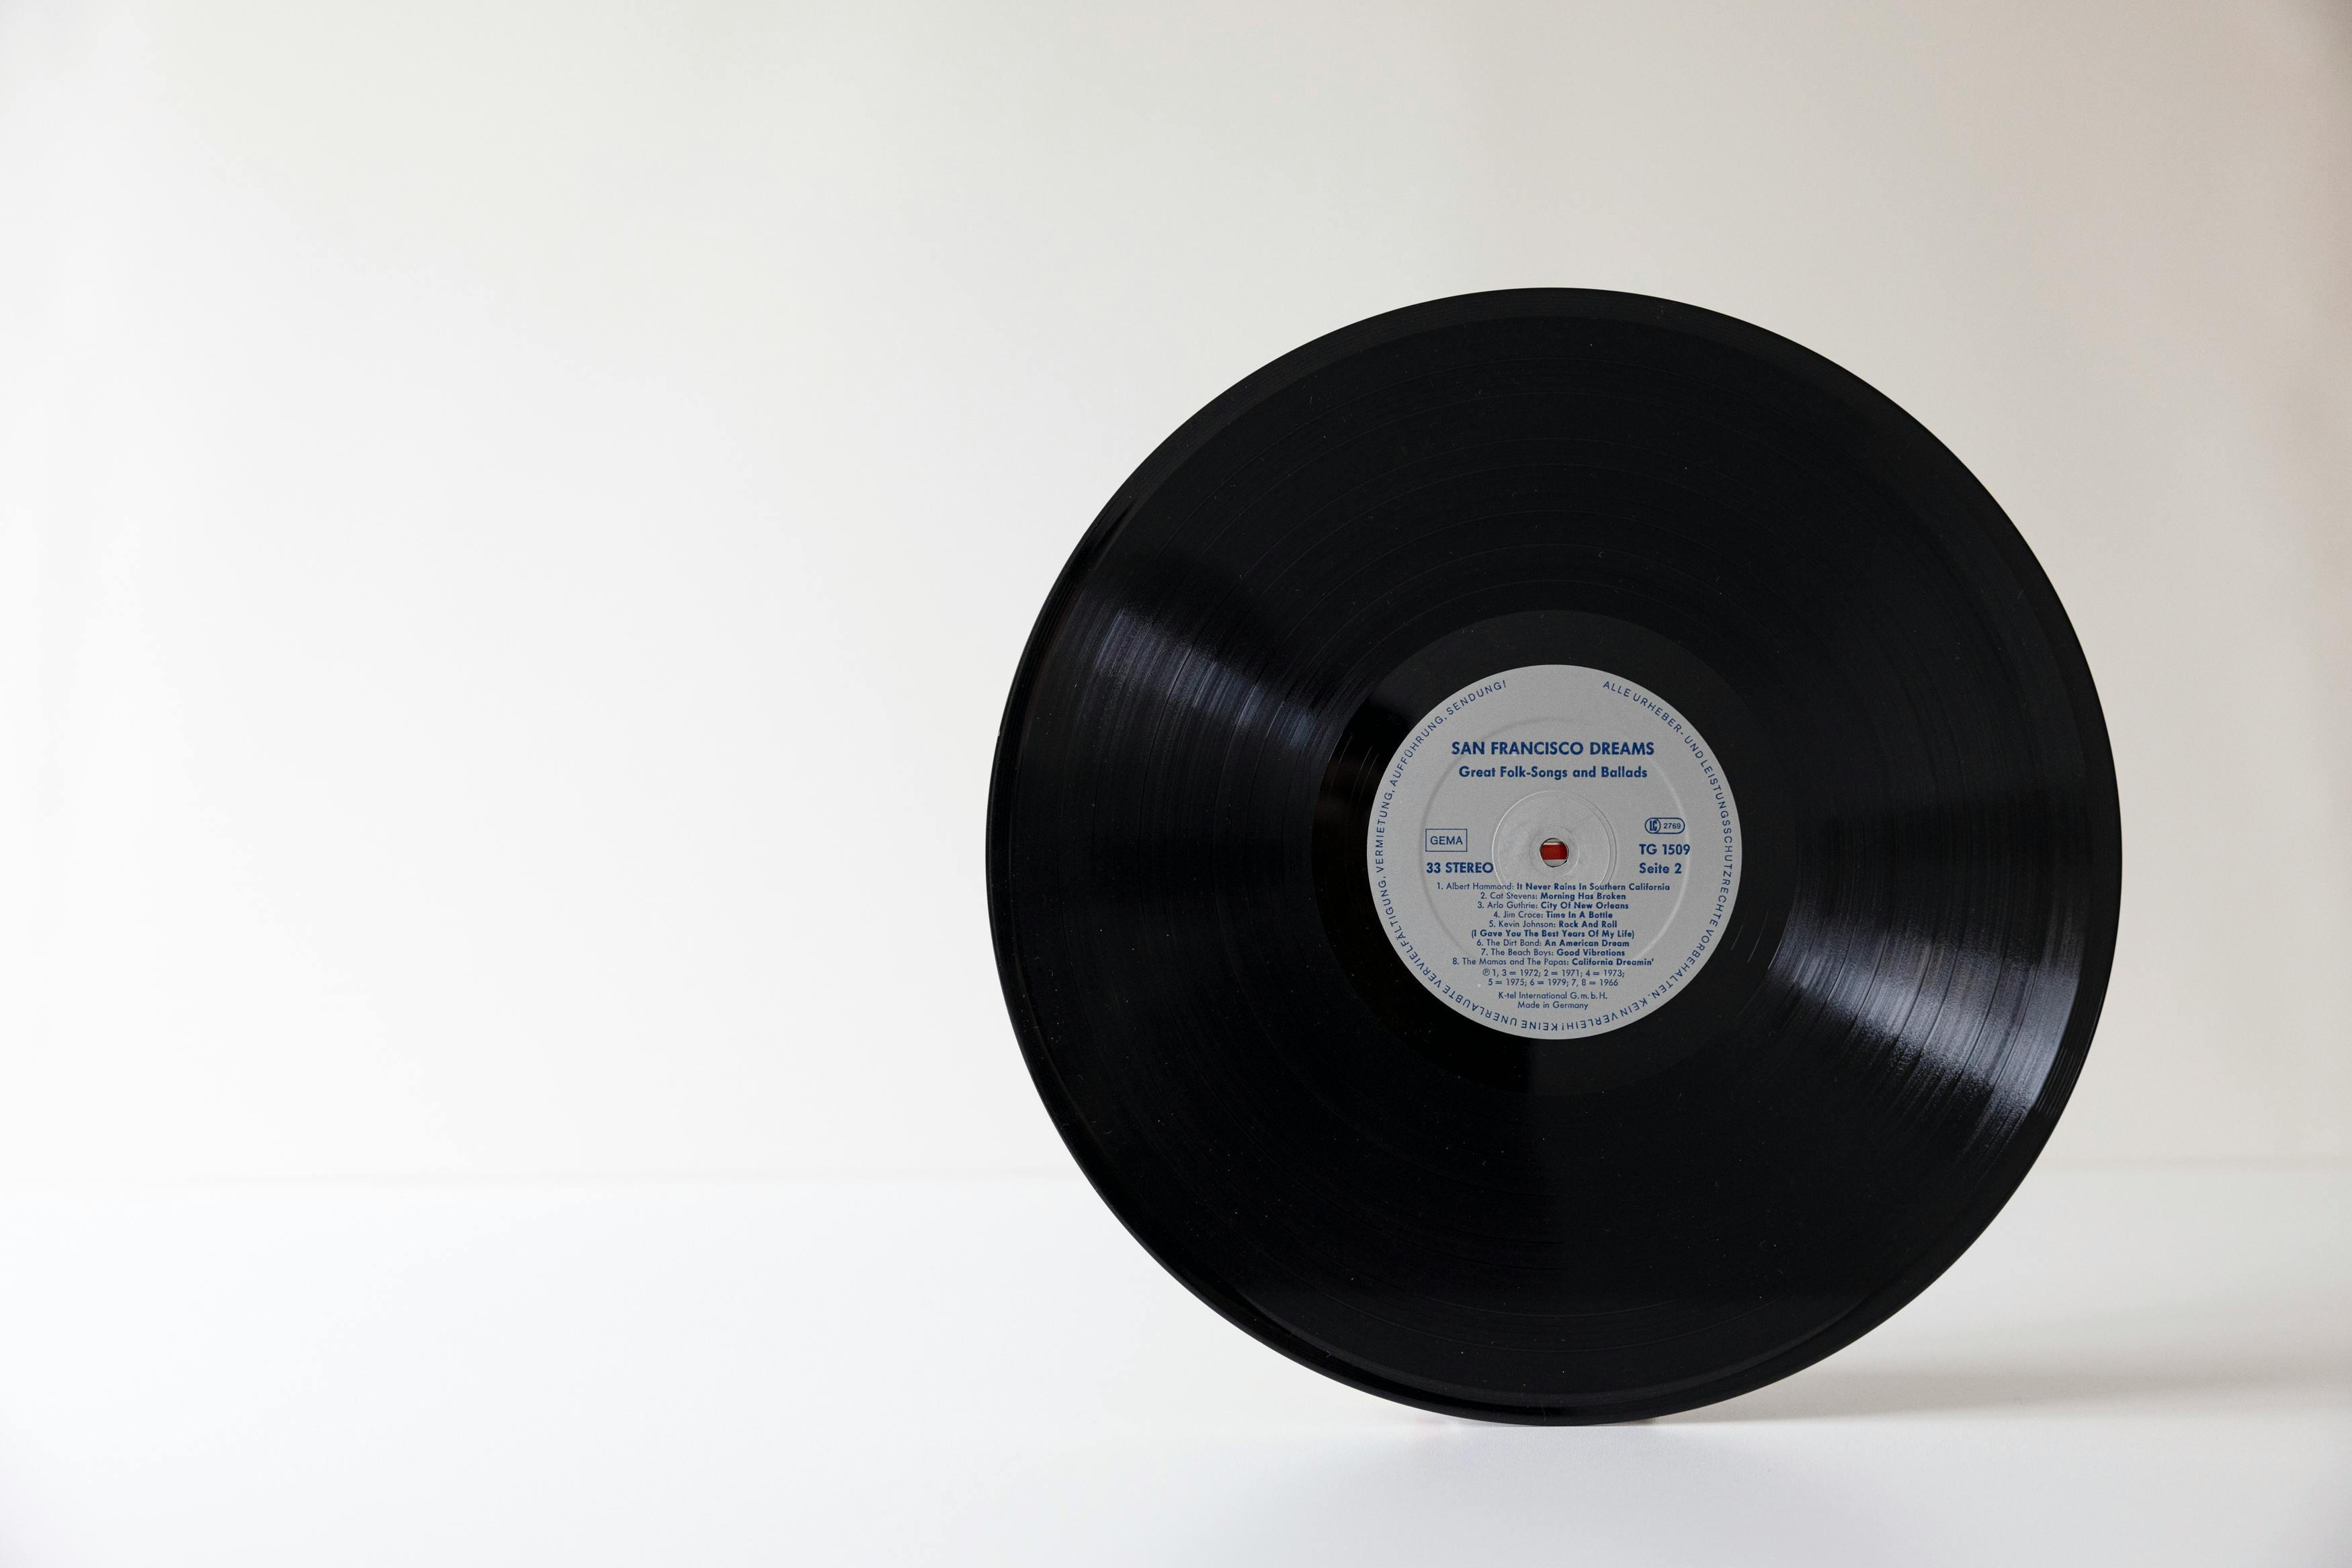 Vinyl Analog Record Music · Free Stock Photo